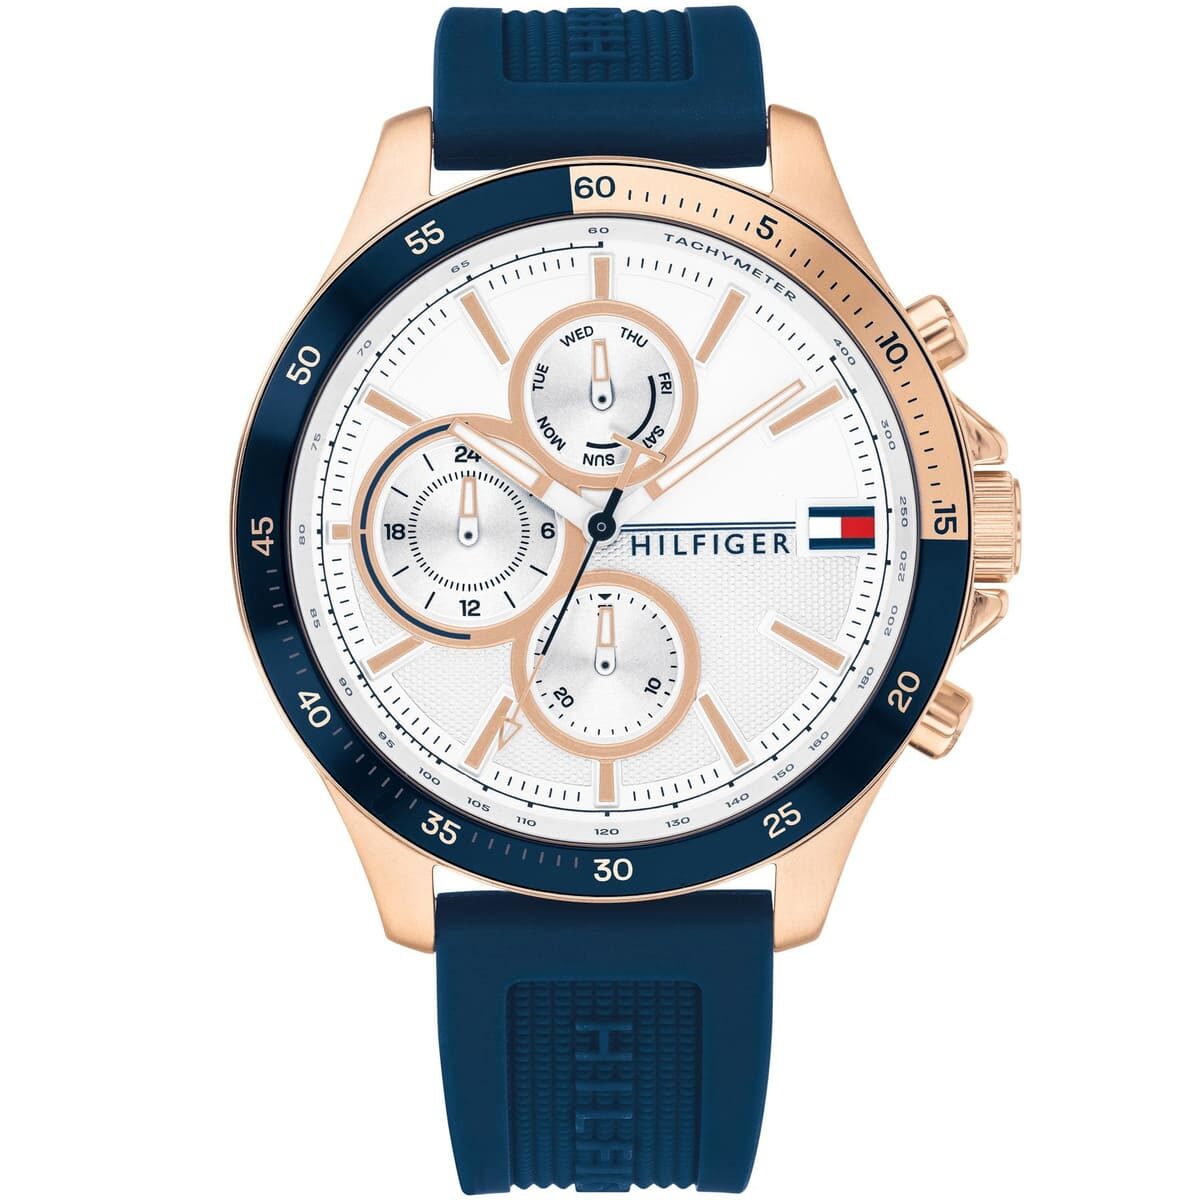 1791778-tommy-hilfiger-watch-men-silver-dial-rubber-blue-strap-quartz-analog-day-date-month-bank